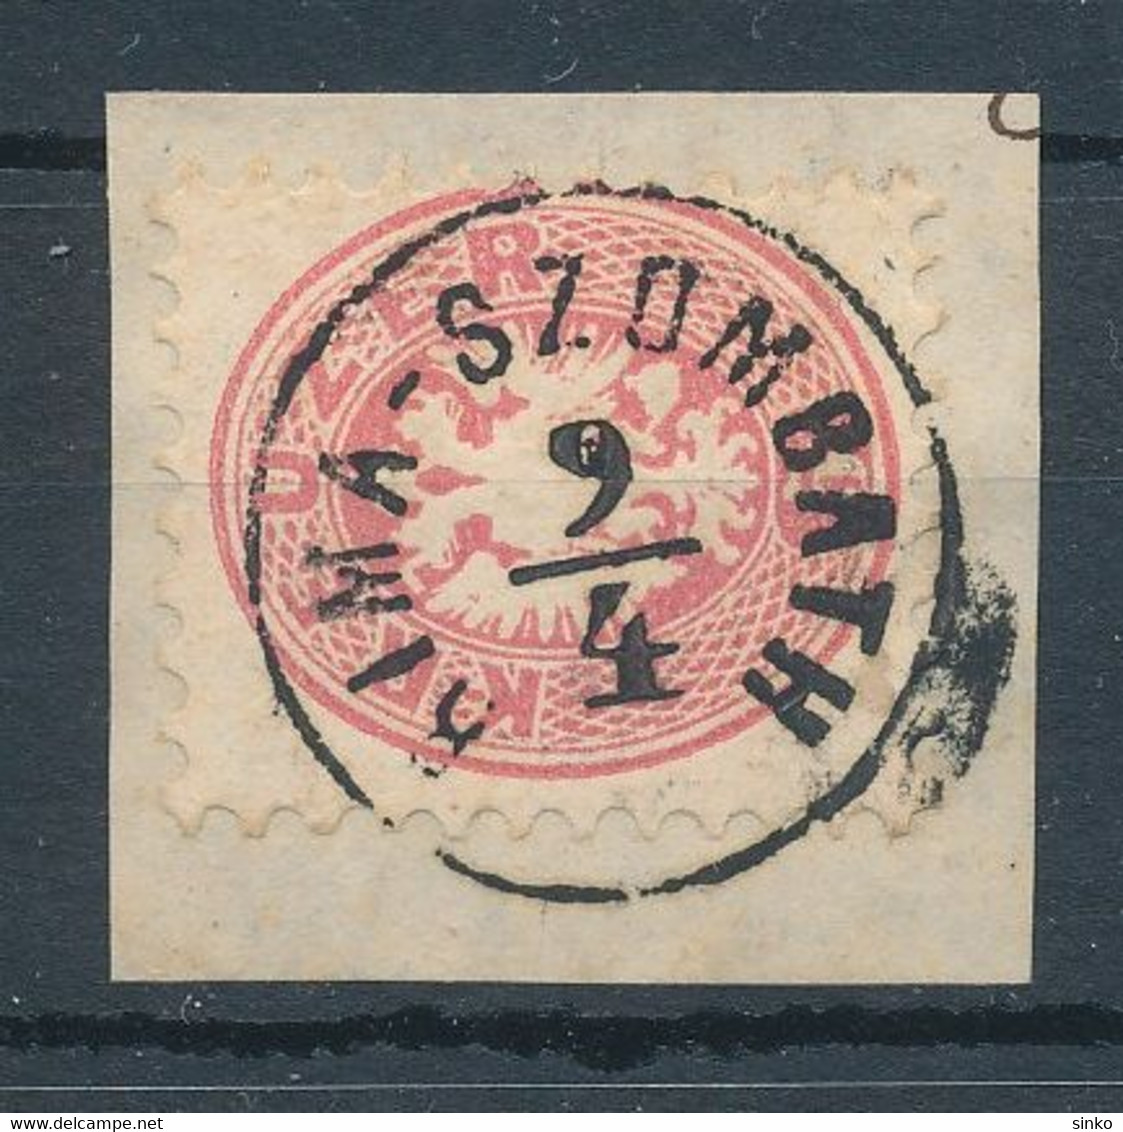 1864. Typography With Embossed Printing, 5kr Stamp RIMA-SZOMBATH - ...-1867 Préphilatélie